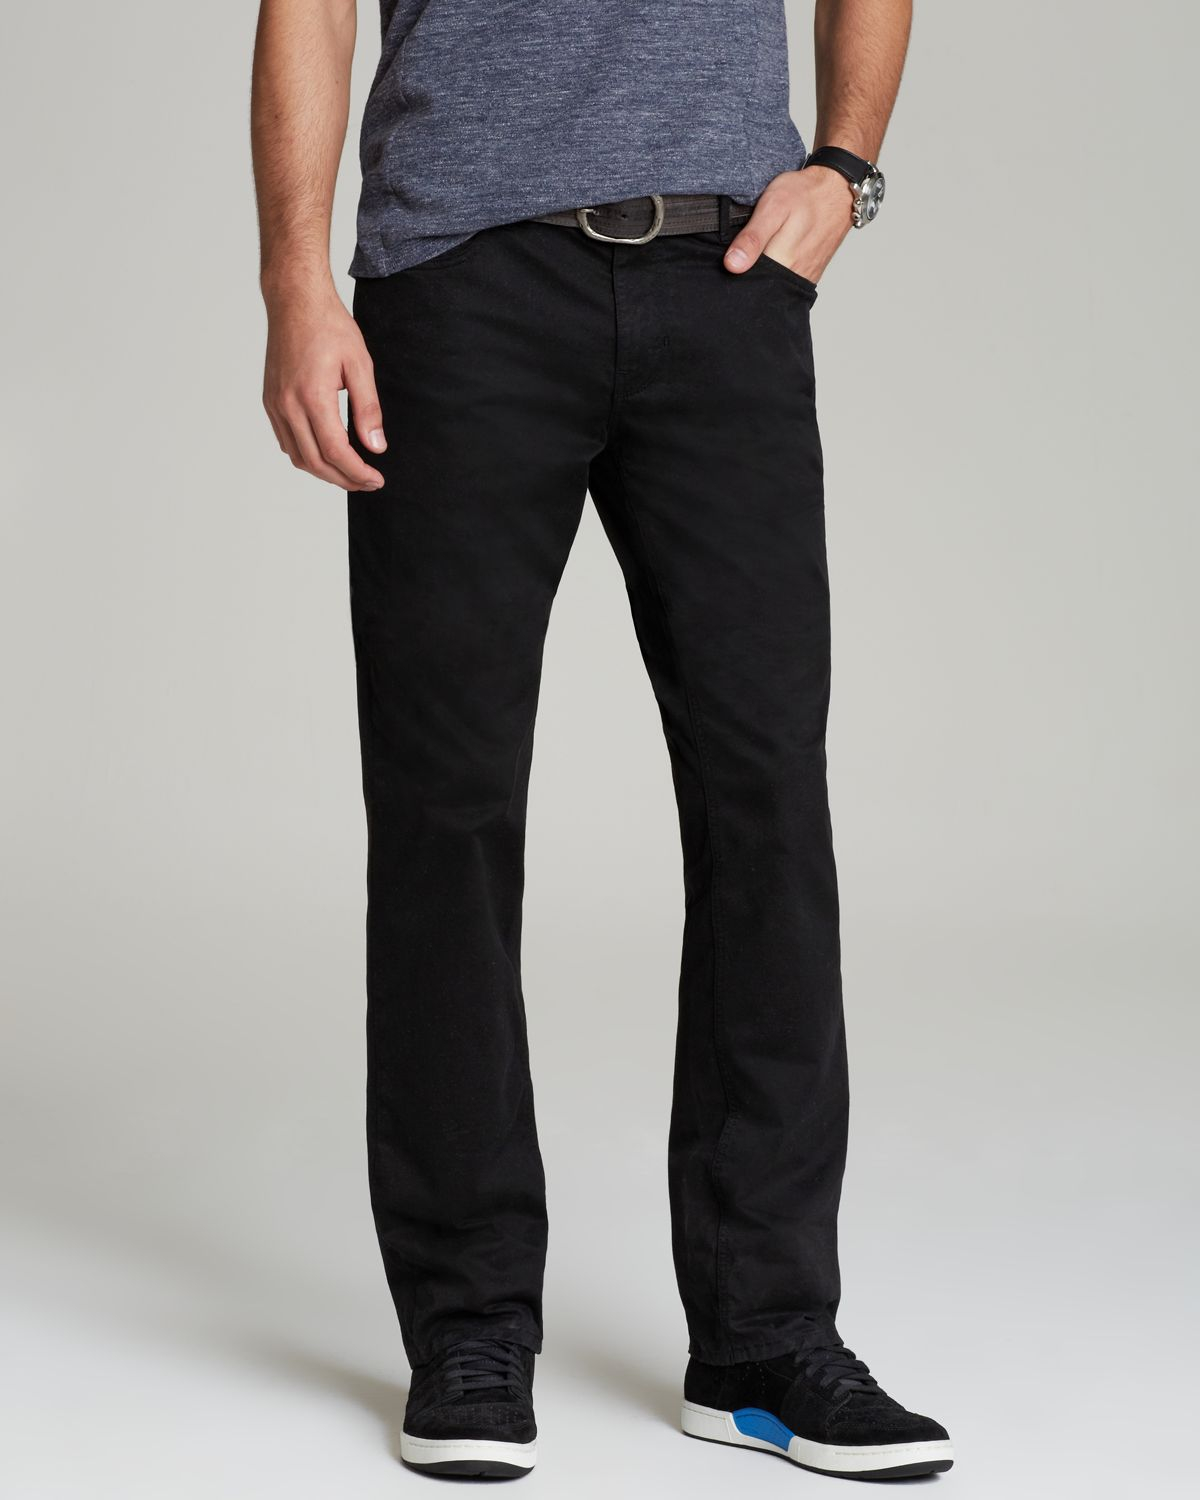 PAIGE Jeans - Normandie Straight Fit in Black Tie (Black) for Men - Lyst